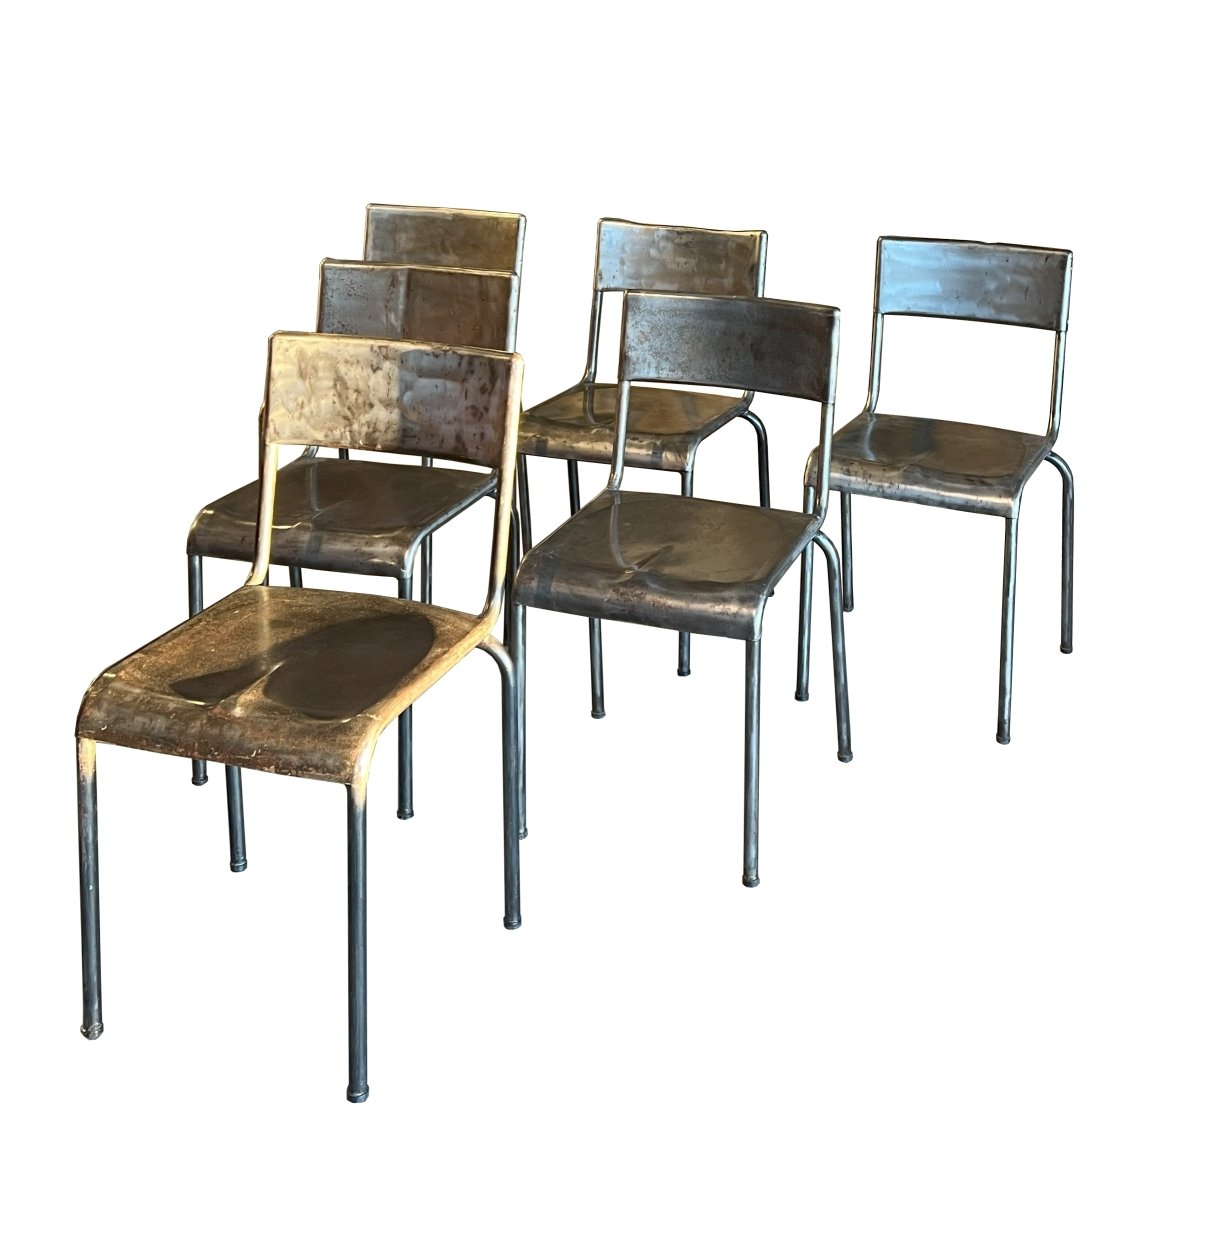 Set of six Italian Vintage Metal Chairs